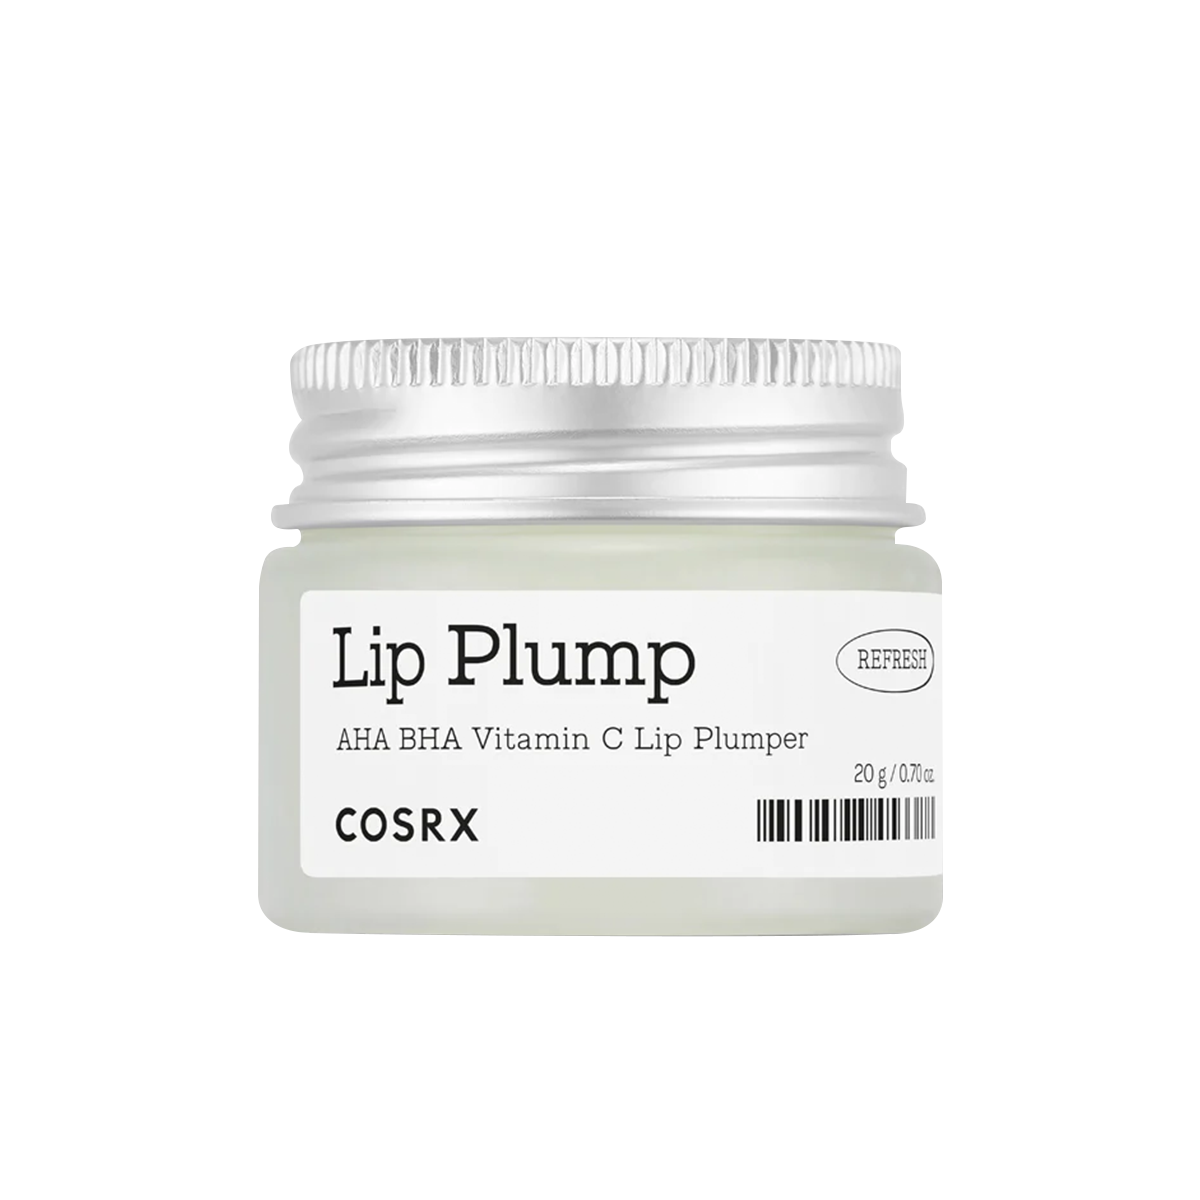 Lip Plump - AHA BHA Vitamin C Lip Plumper